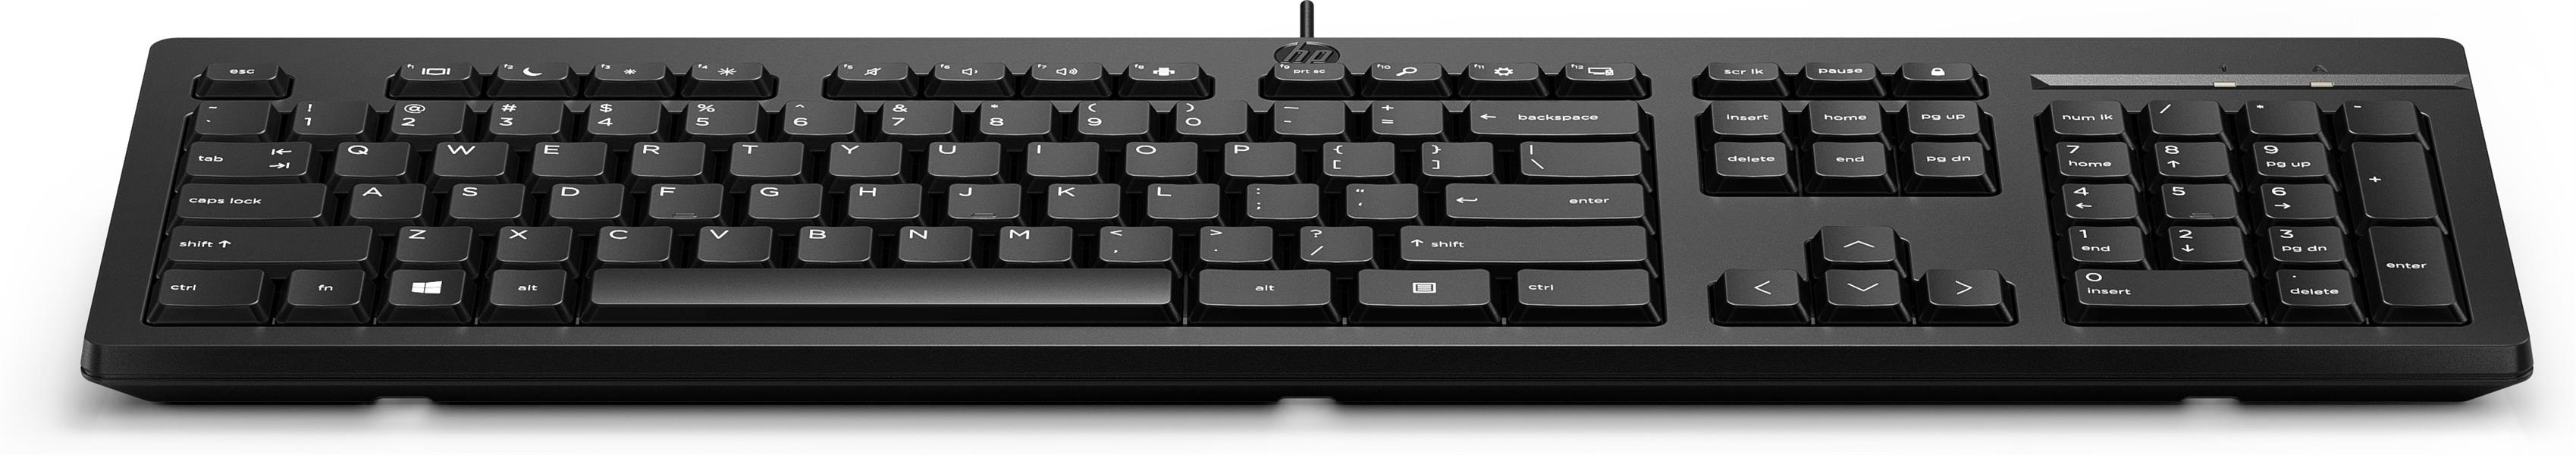 125 USB Keyboard - German